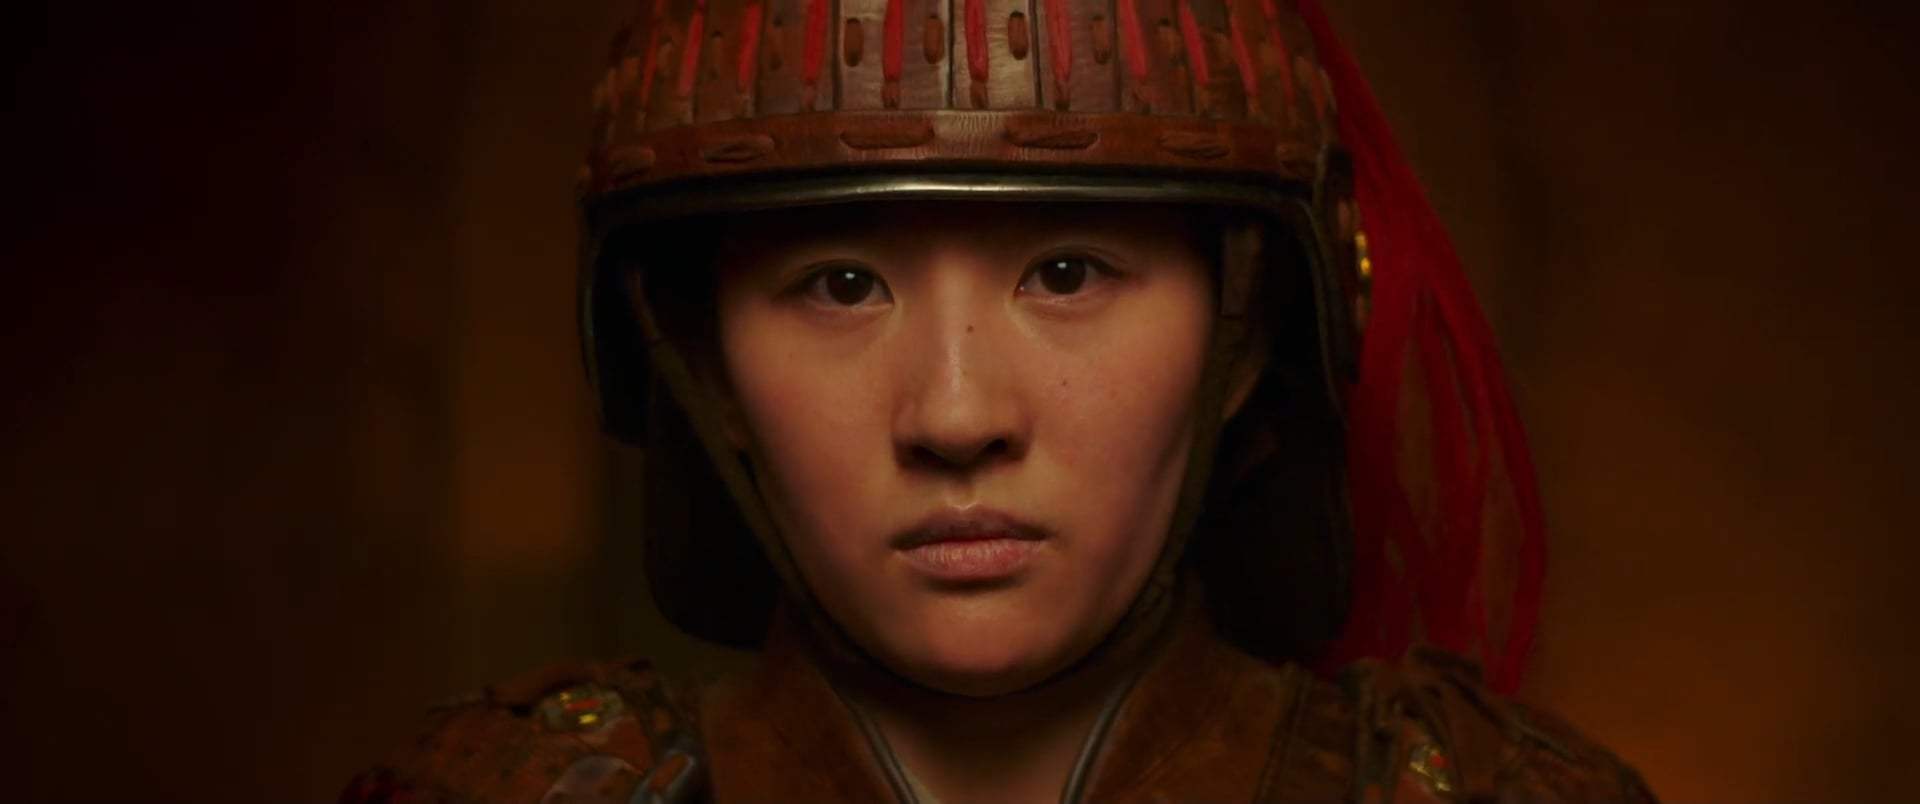 Mulan (2020) - Loyal, Brave and True Screen Capture #4